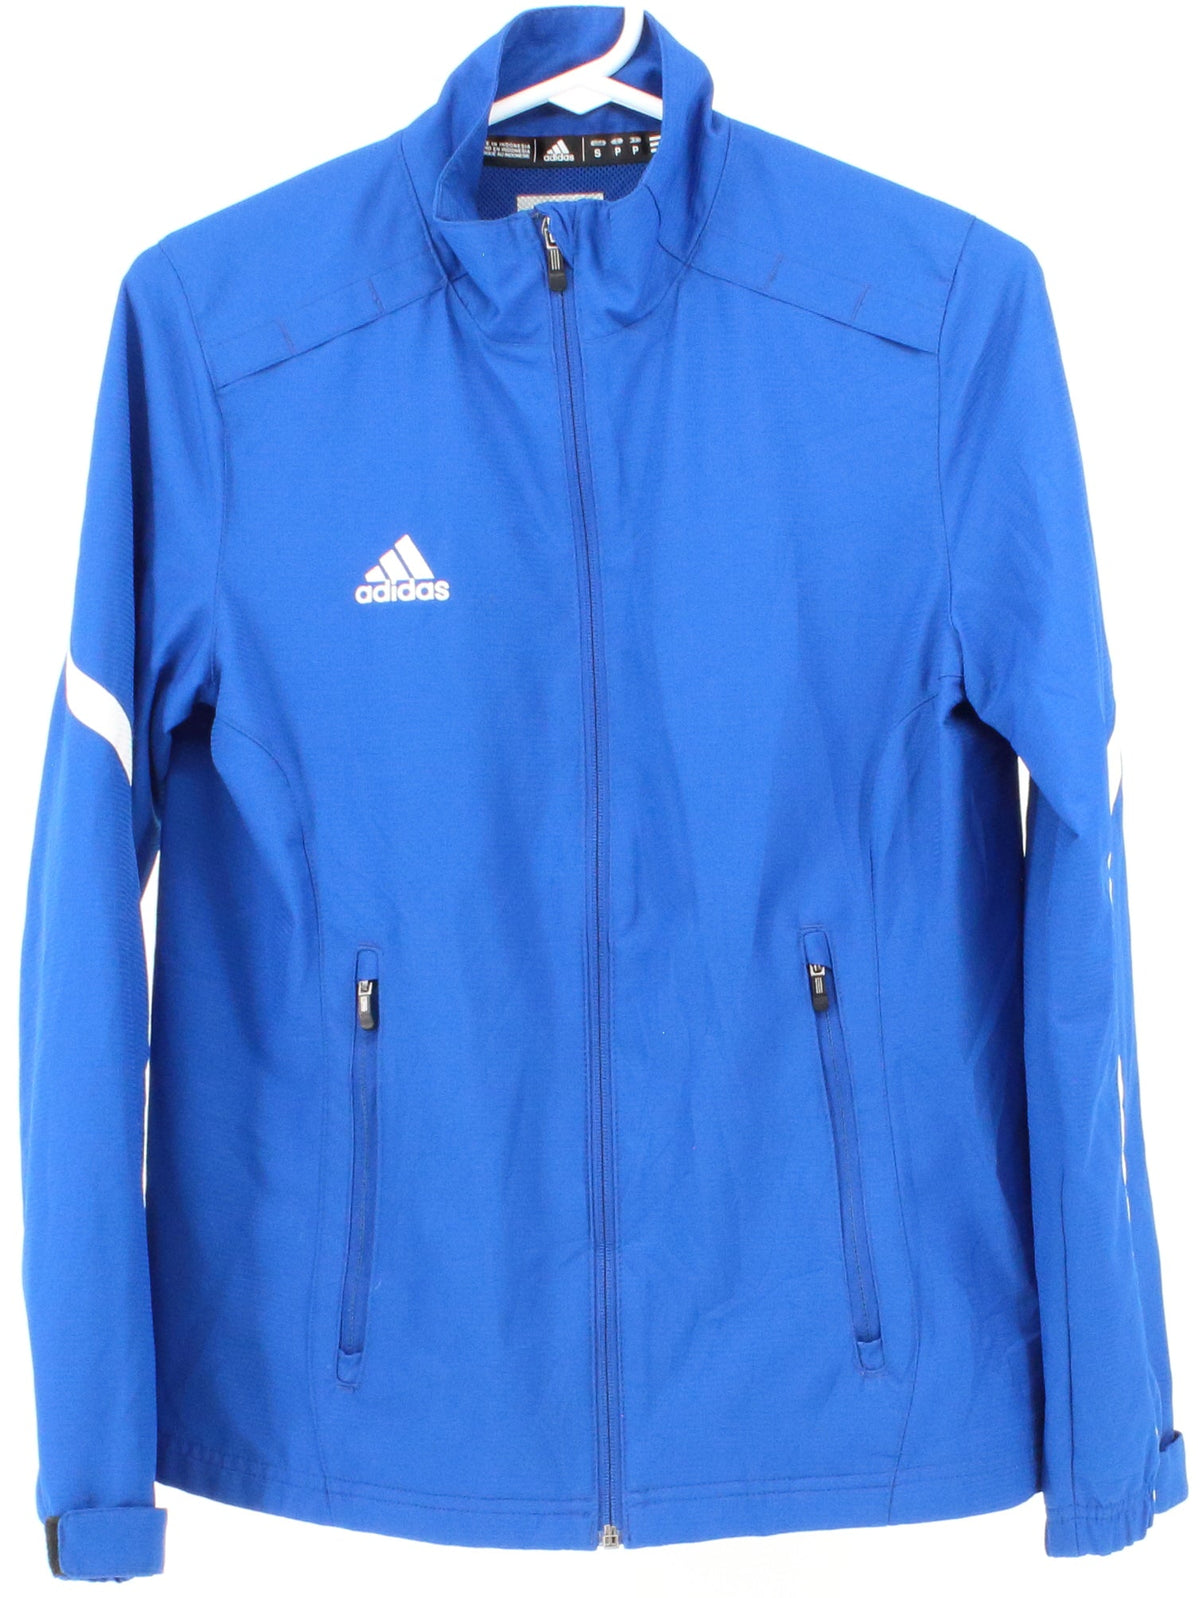 Adidas Royal Blue and White Men's Jacket